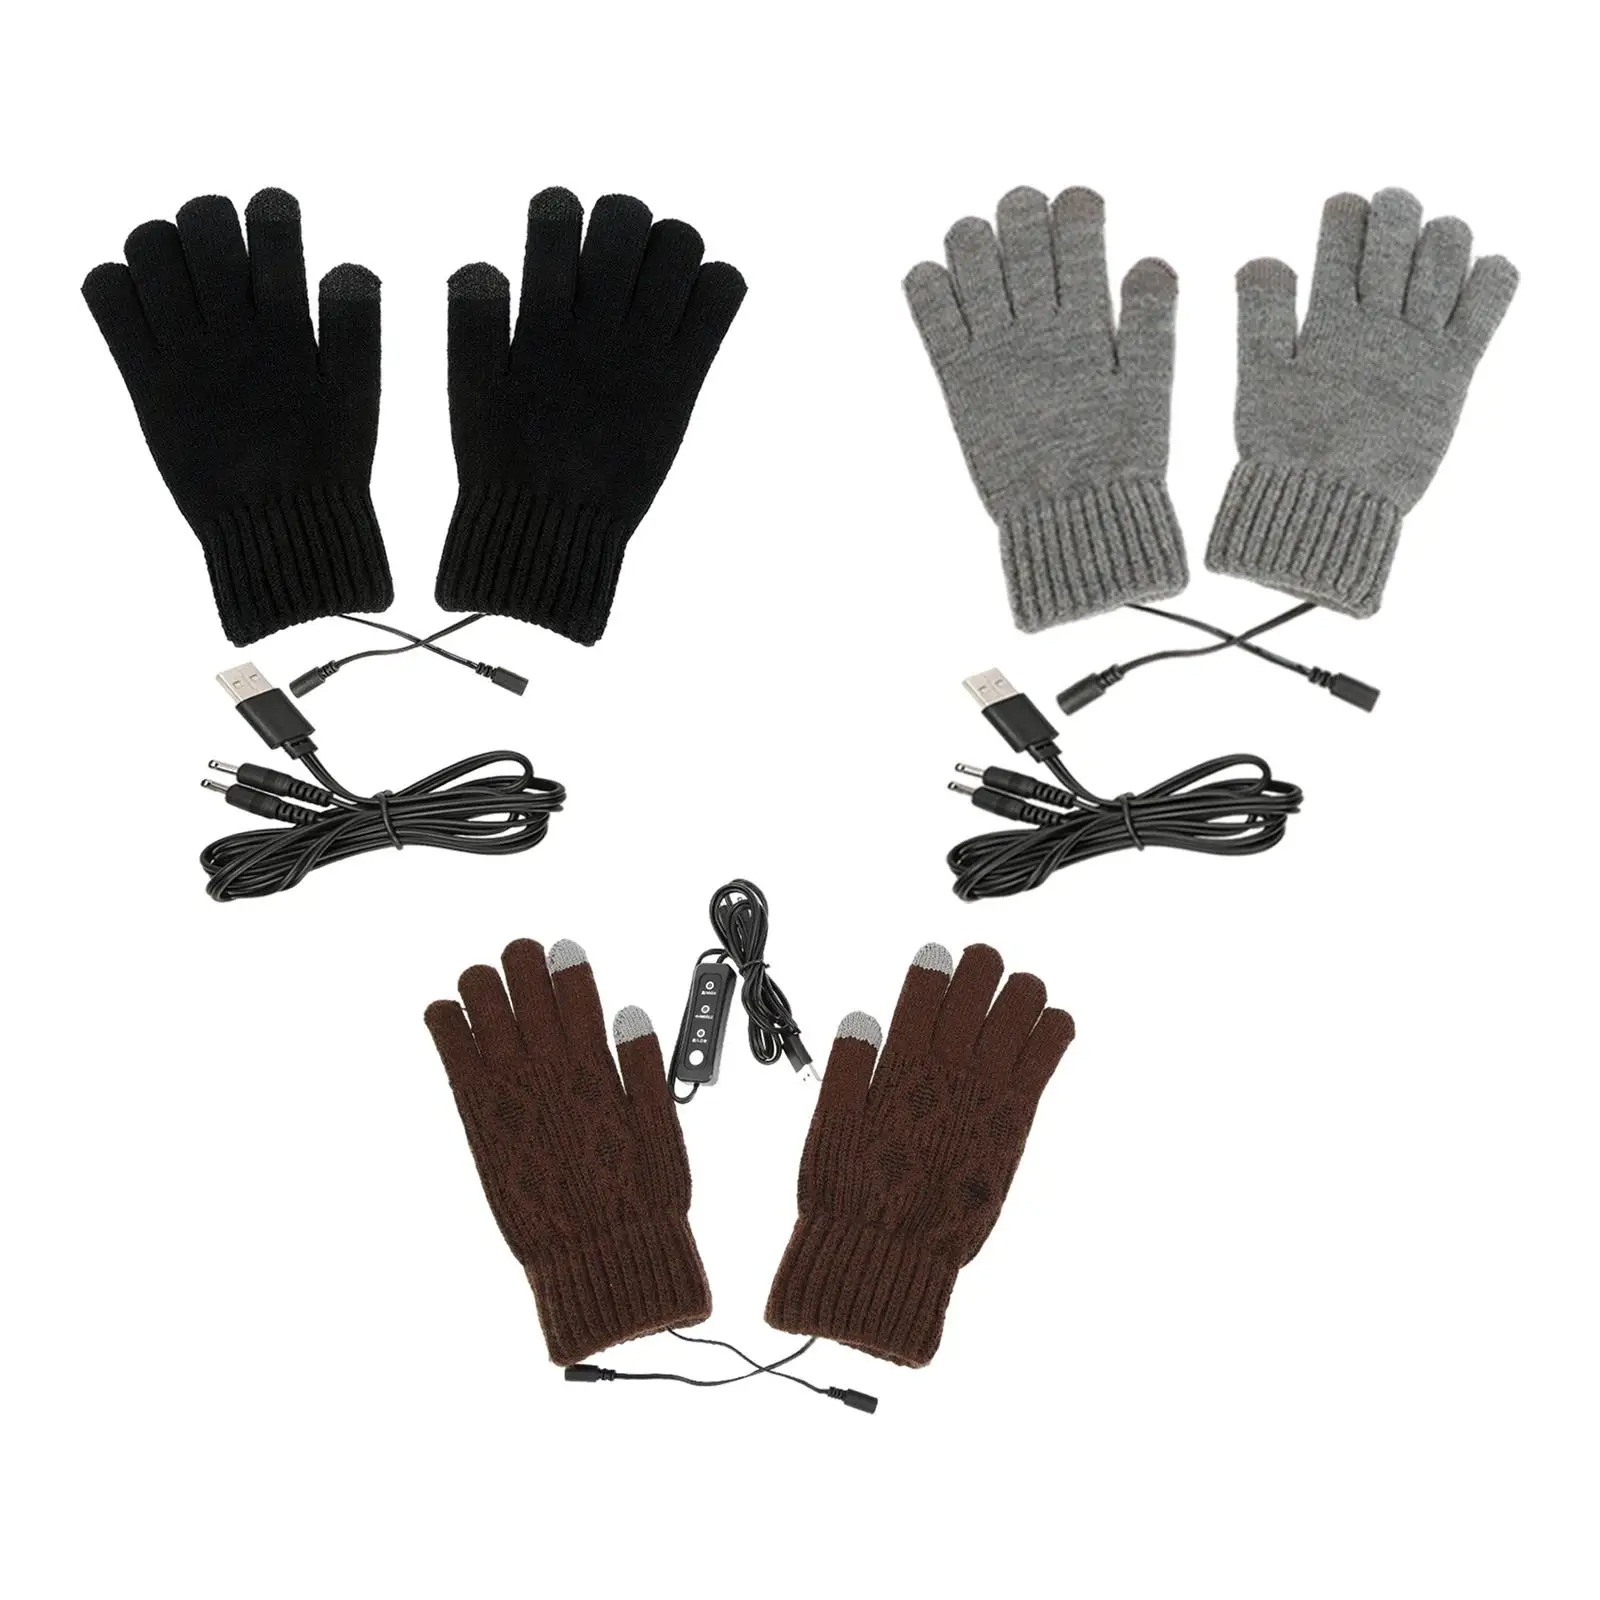 Heated Gloves Touchscreen  Full Finger Gloves Unisex Anti  Knitting Hand Gloves for Working Typing